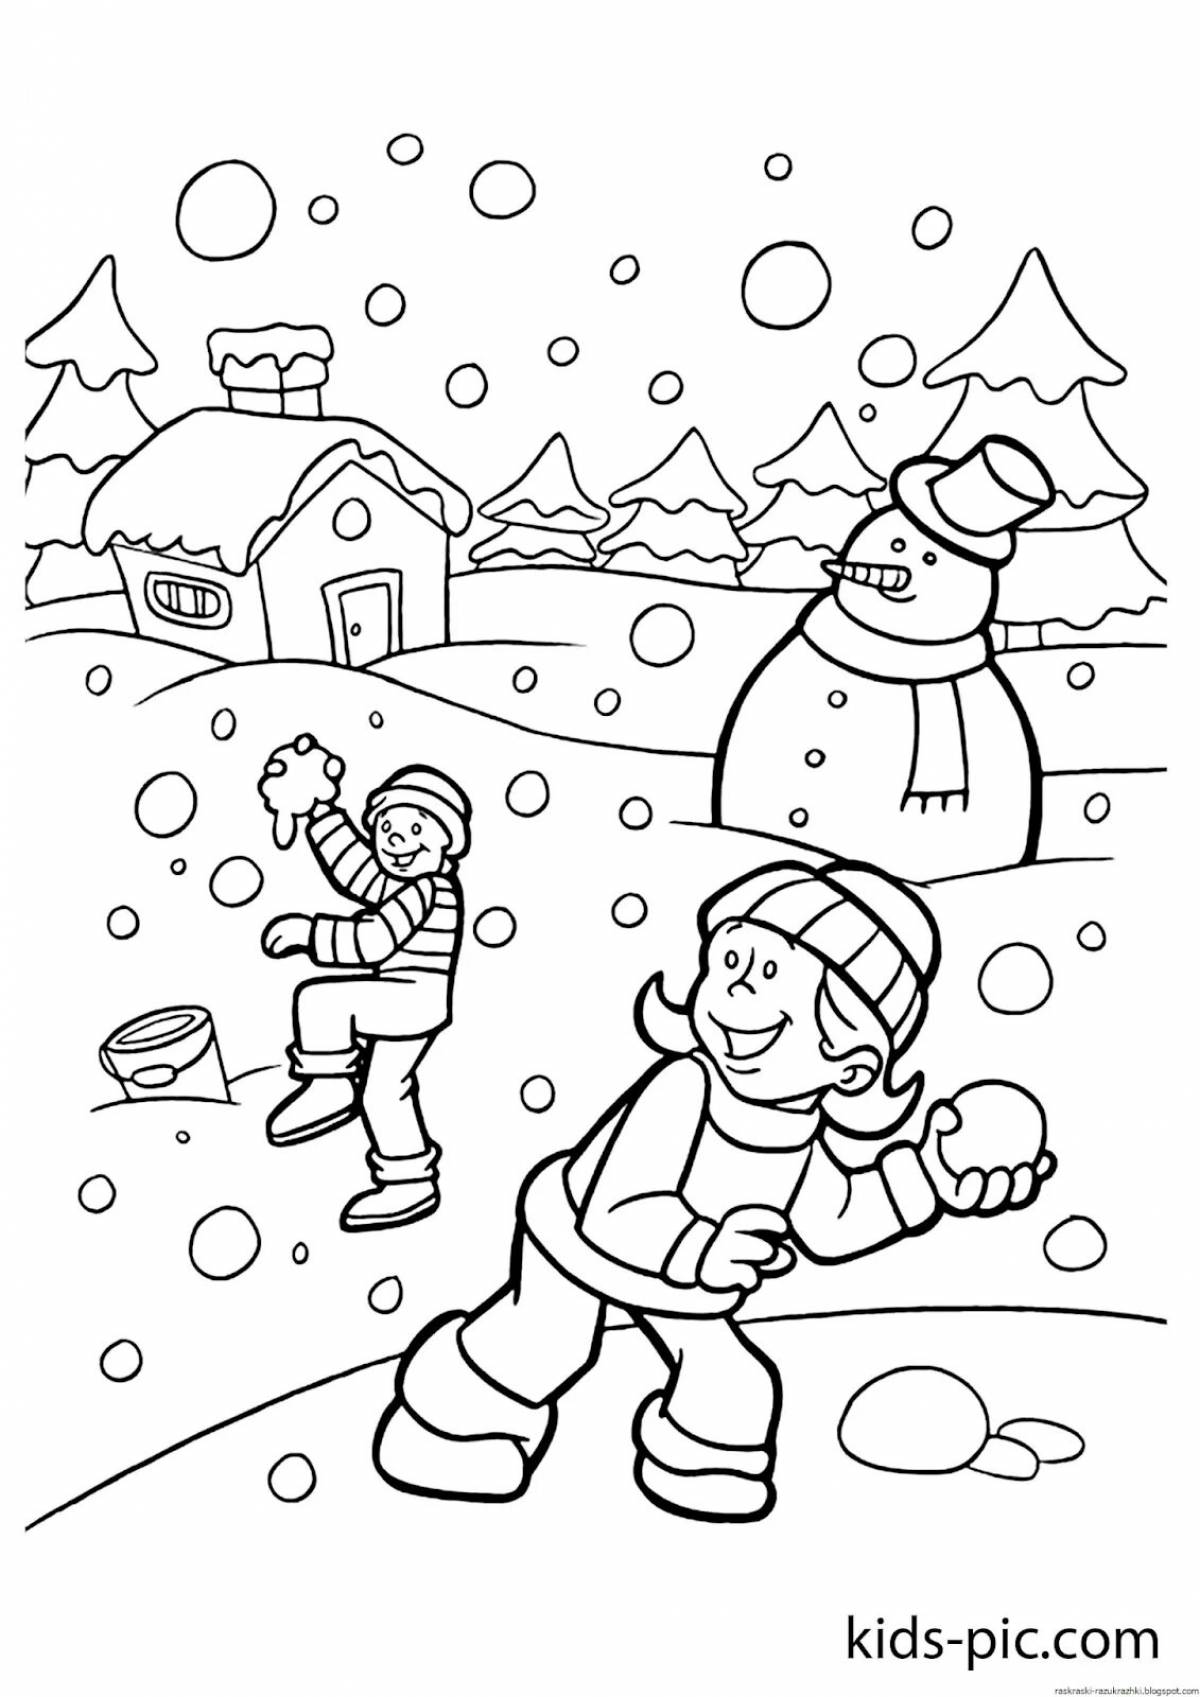 Children's fun in winter #6